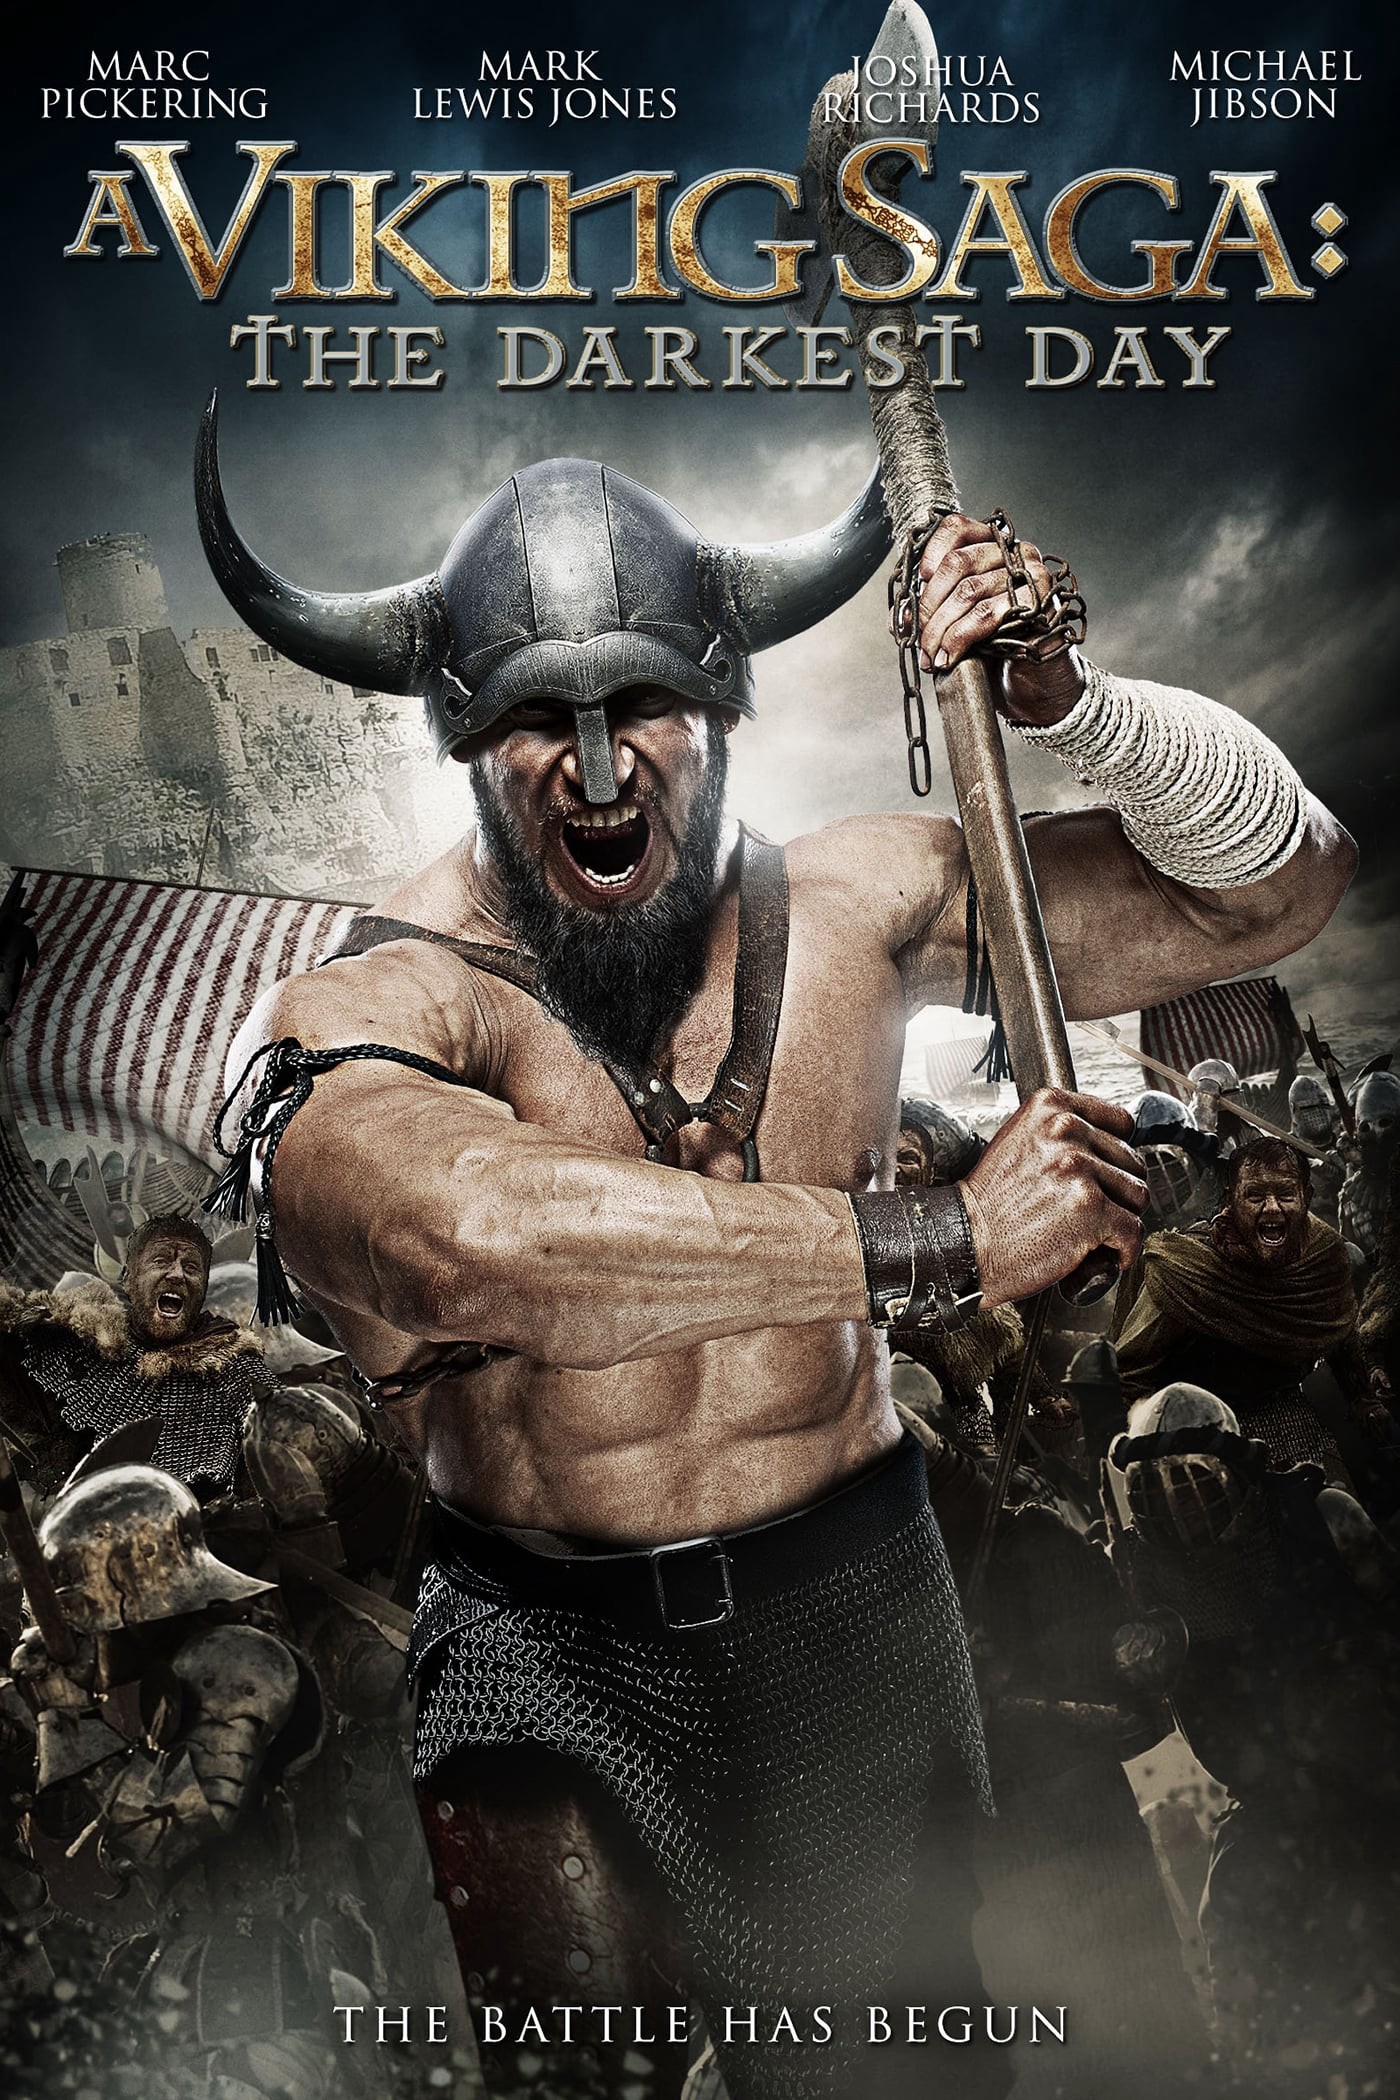 A Viking Saga: The Darkest Day 2013